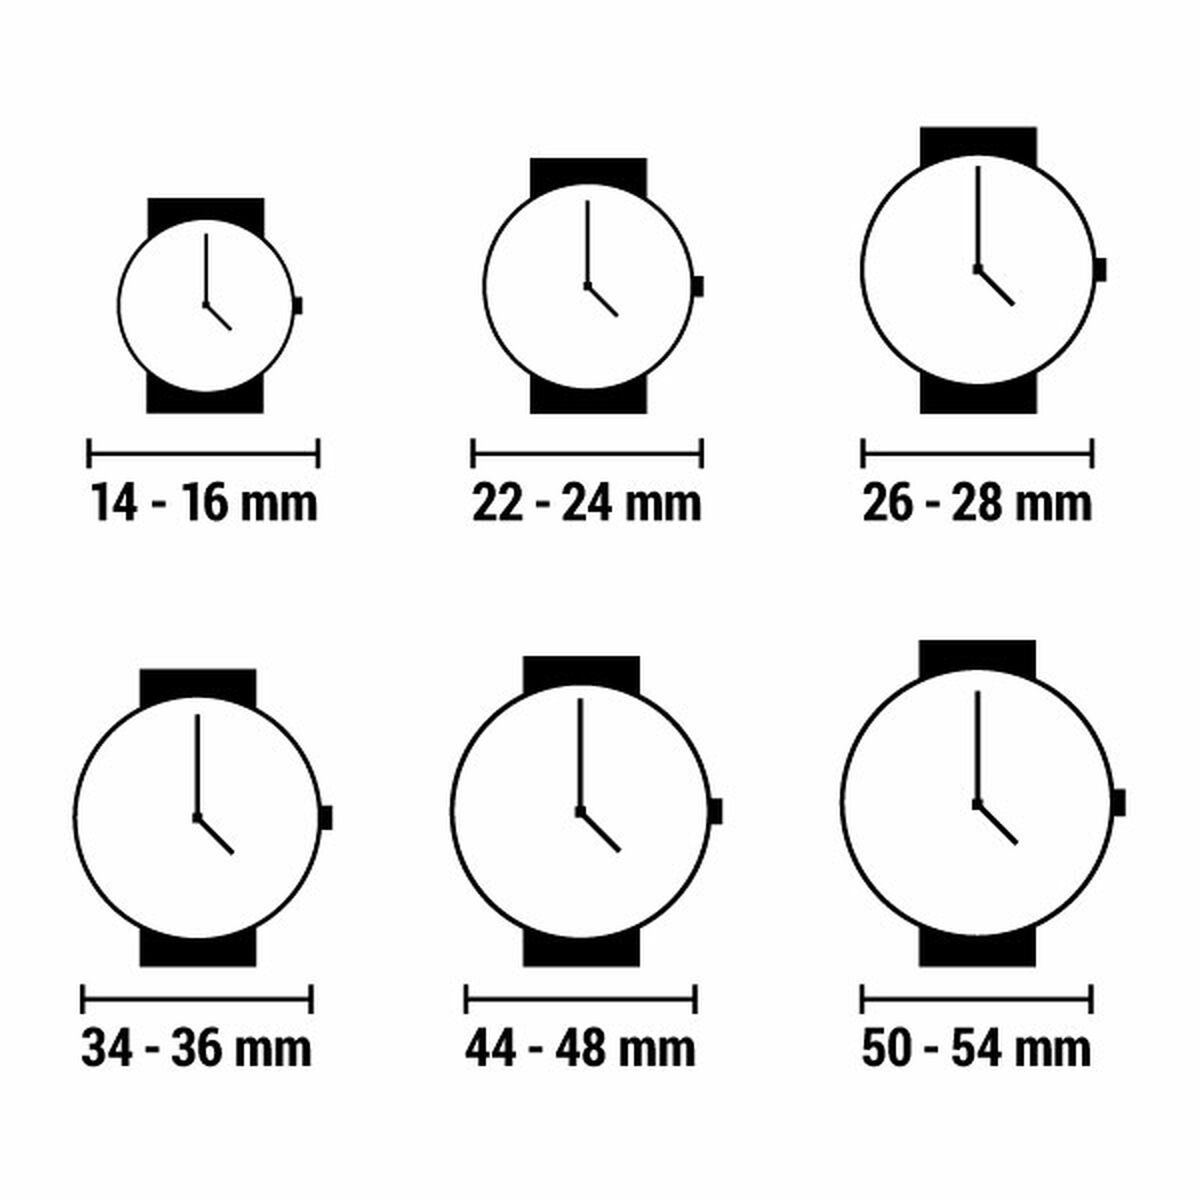 Horloge Dames Cauny CMJ007